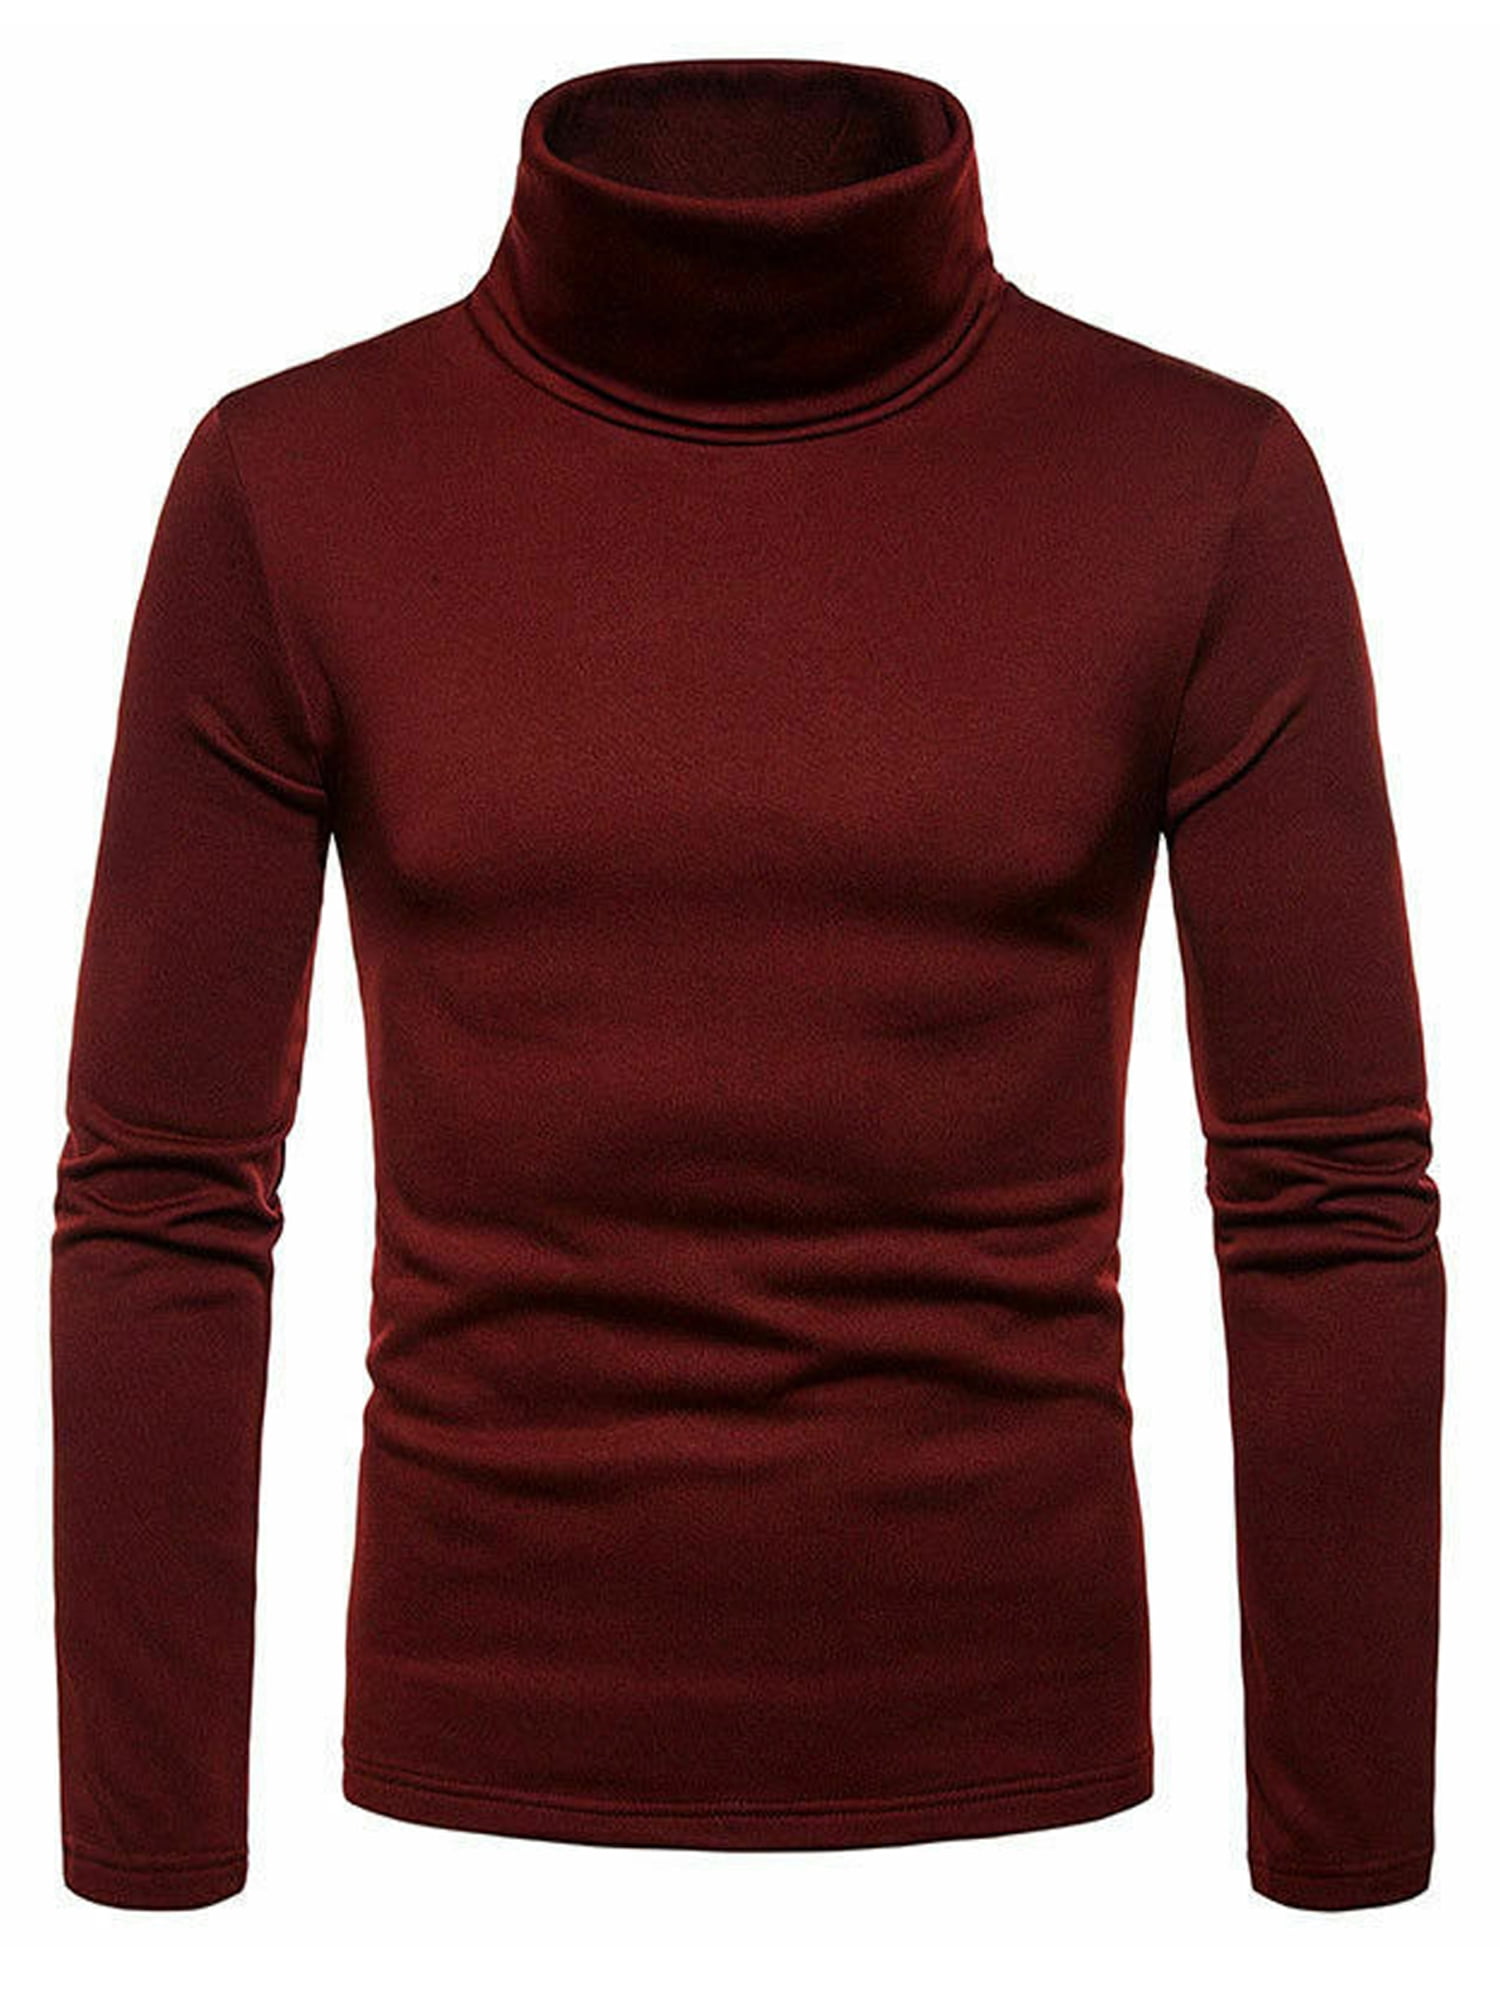 DuAnyozu Men Warm Sweater High Collar Skivvy Turtle Neck Shirt Blouse ...